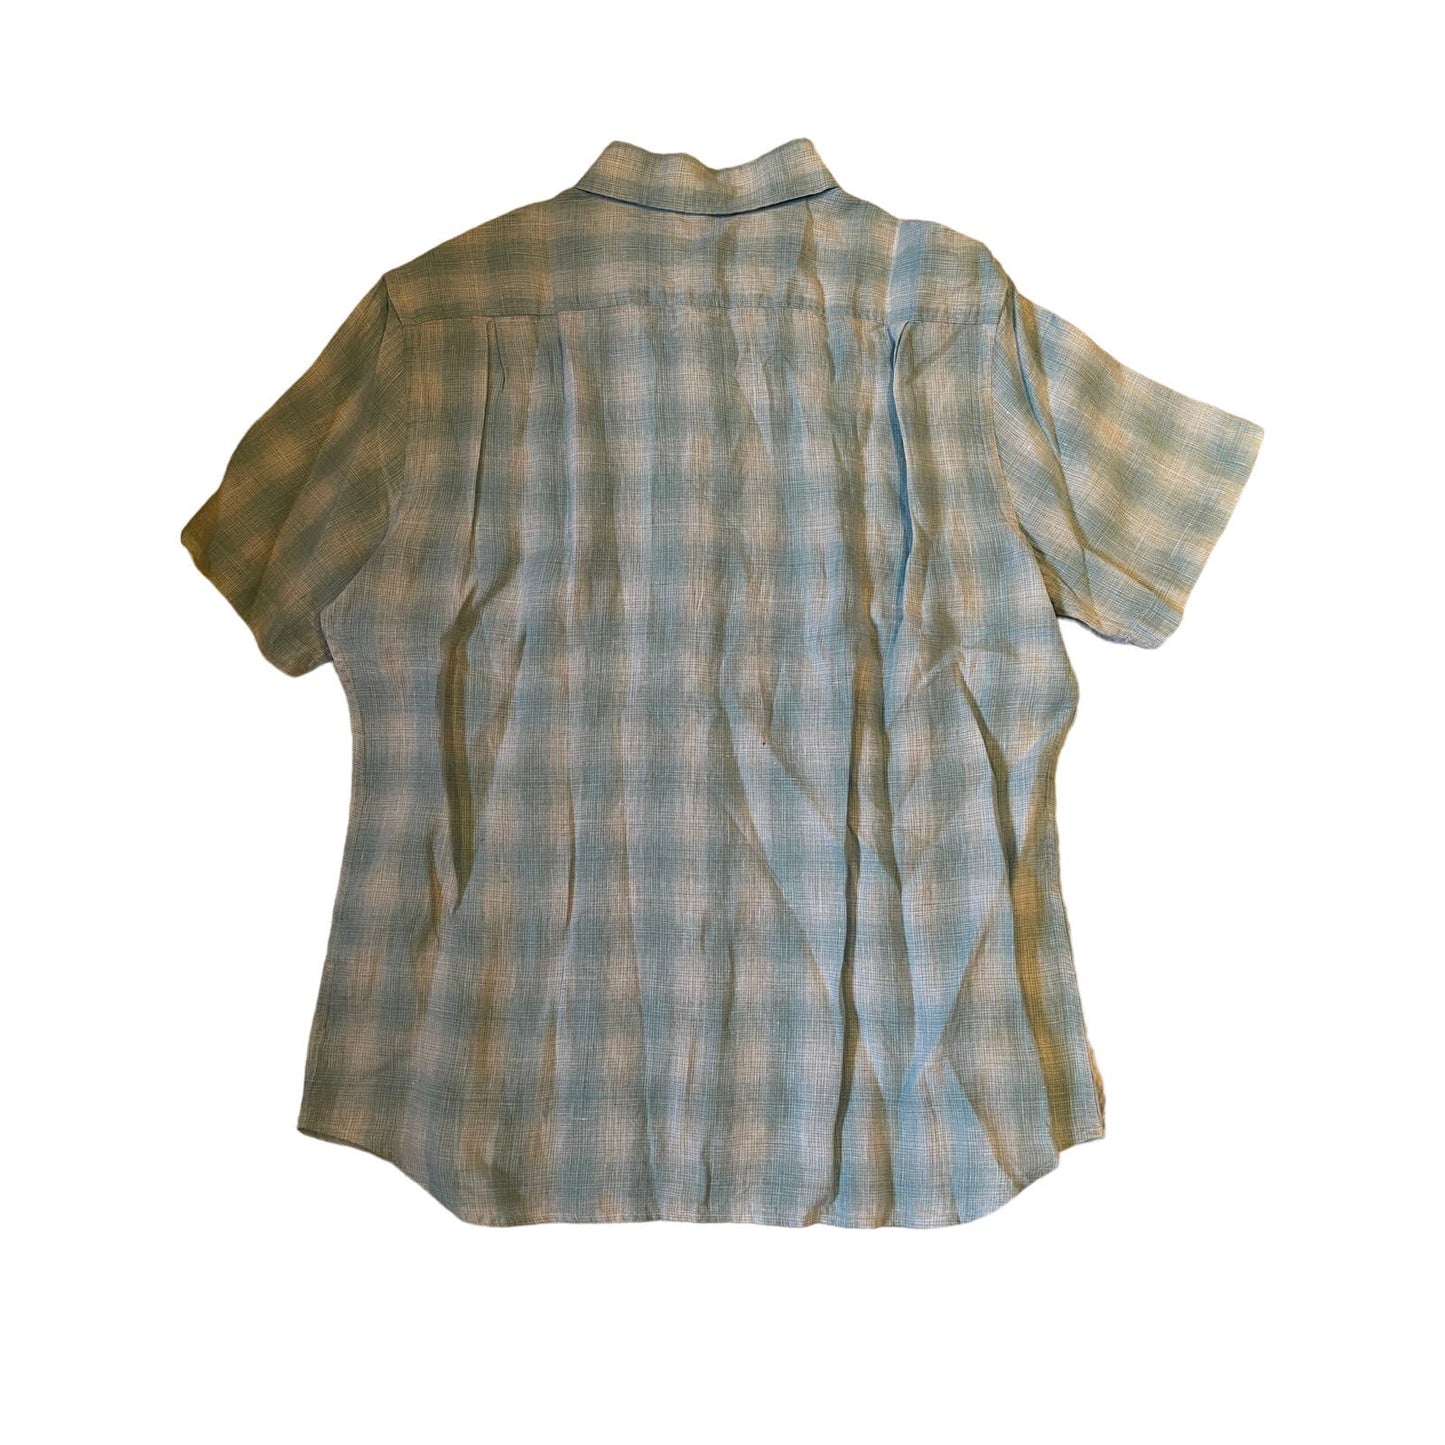 Black & Brown 1826 Men's Blue Plaid Short Sleeve Linen Button Front Shirt